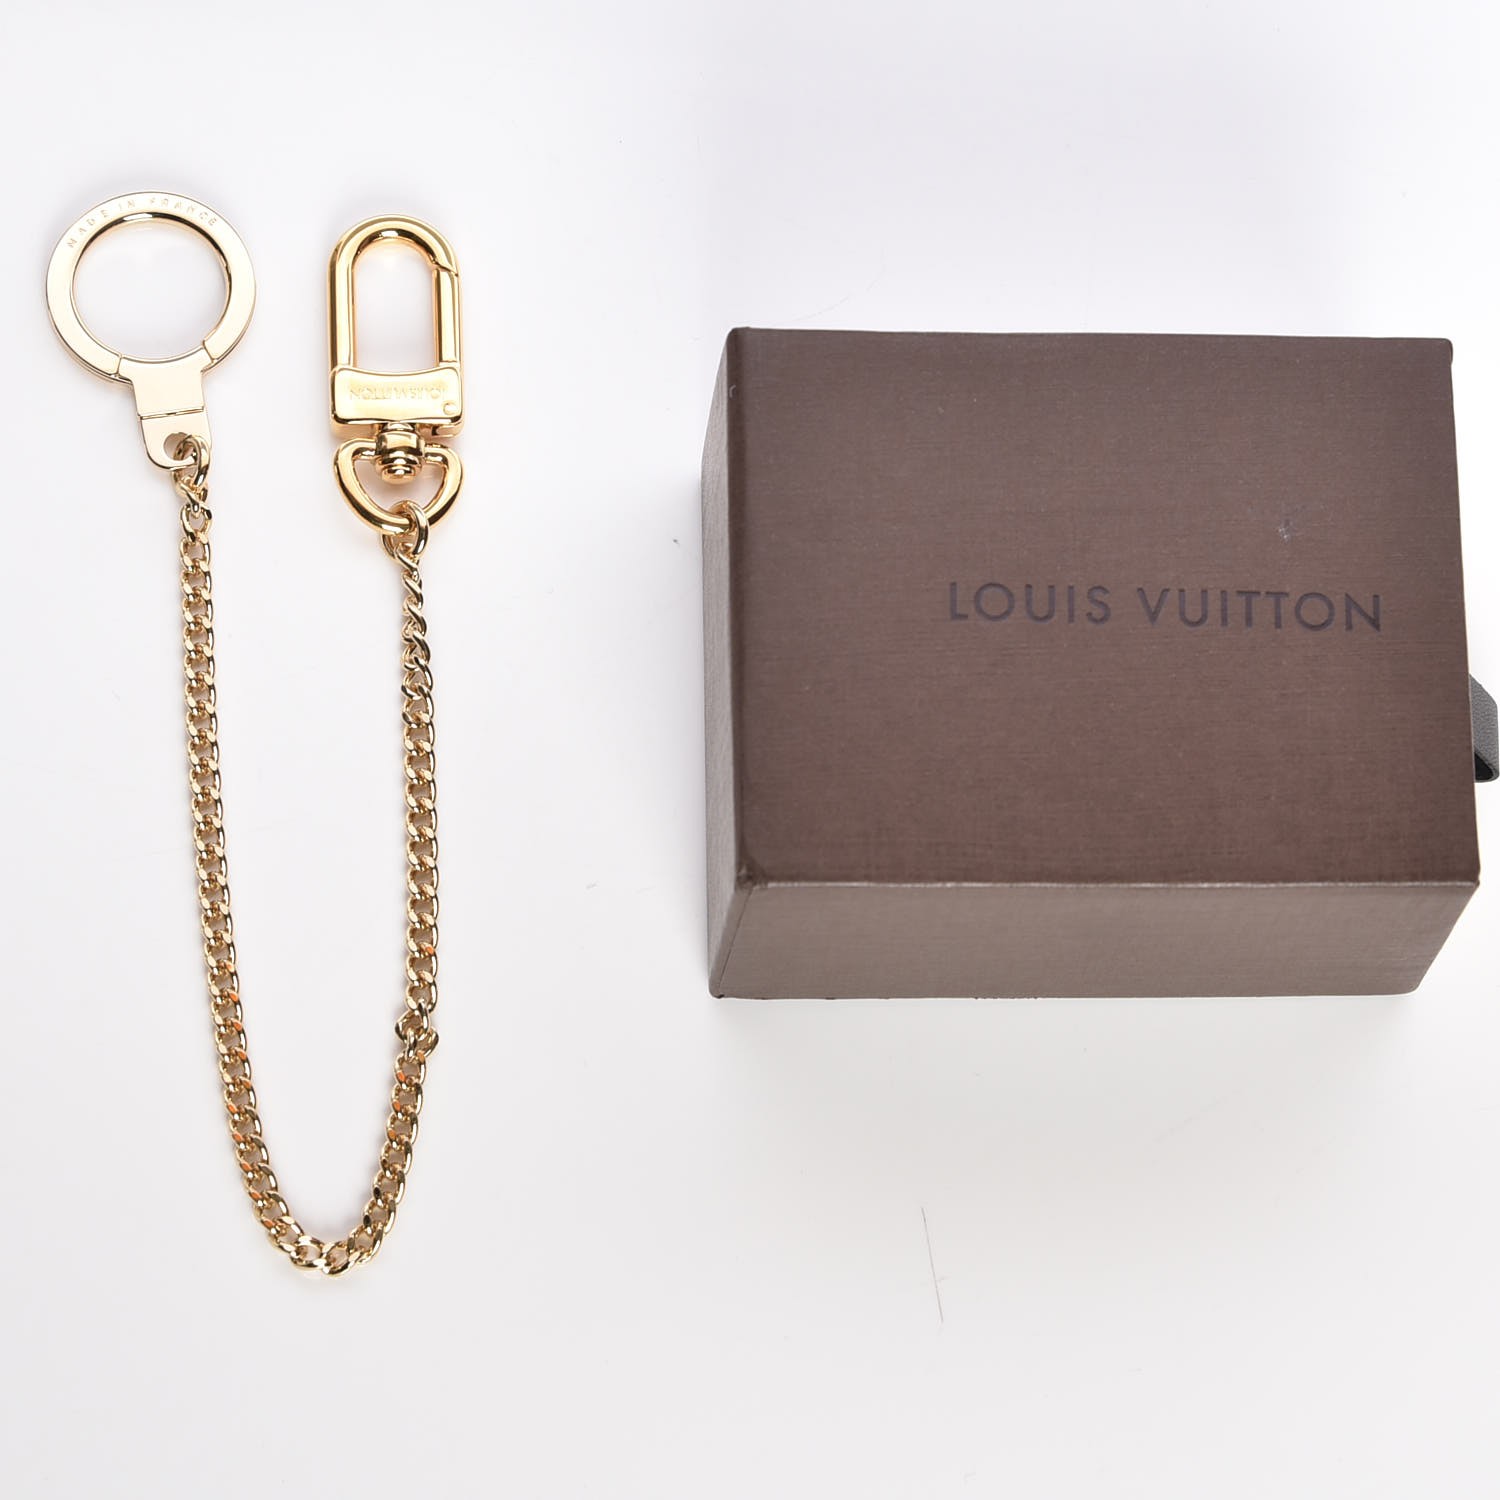 LOUIS VUITTON Pochette Extender Key Ring Chain Gold 275973